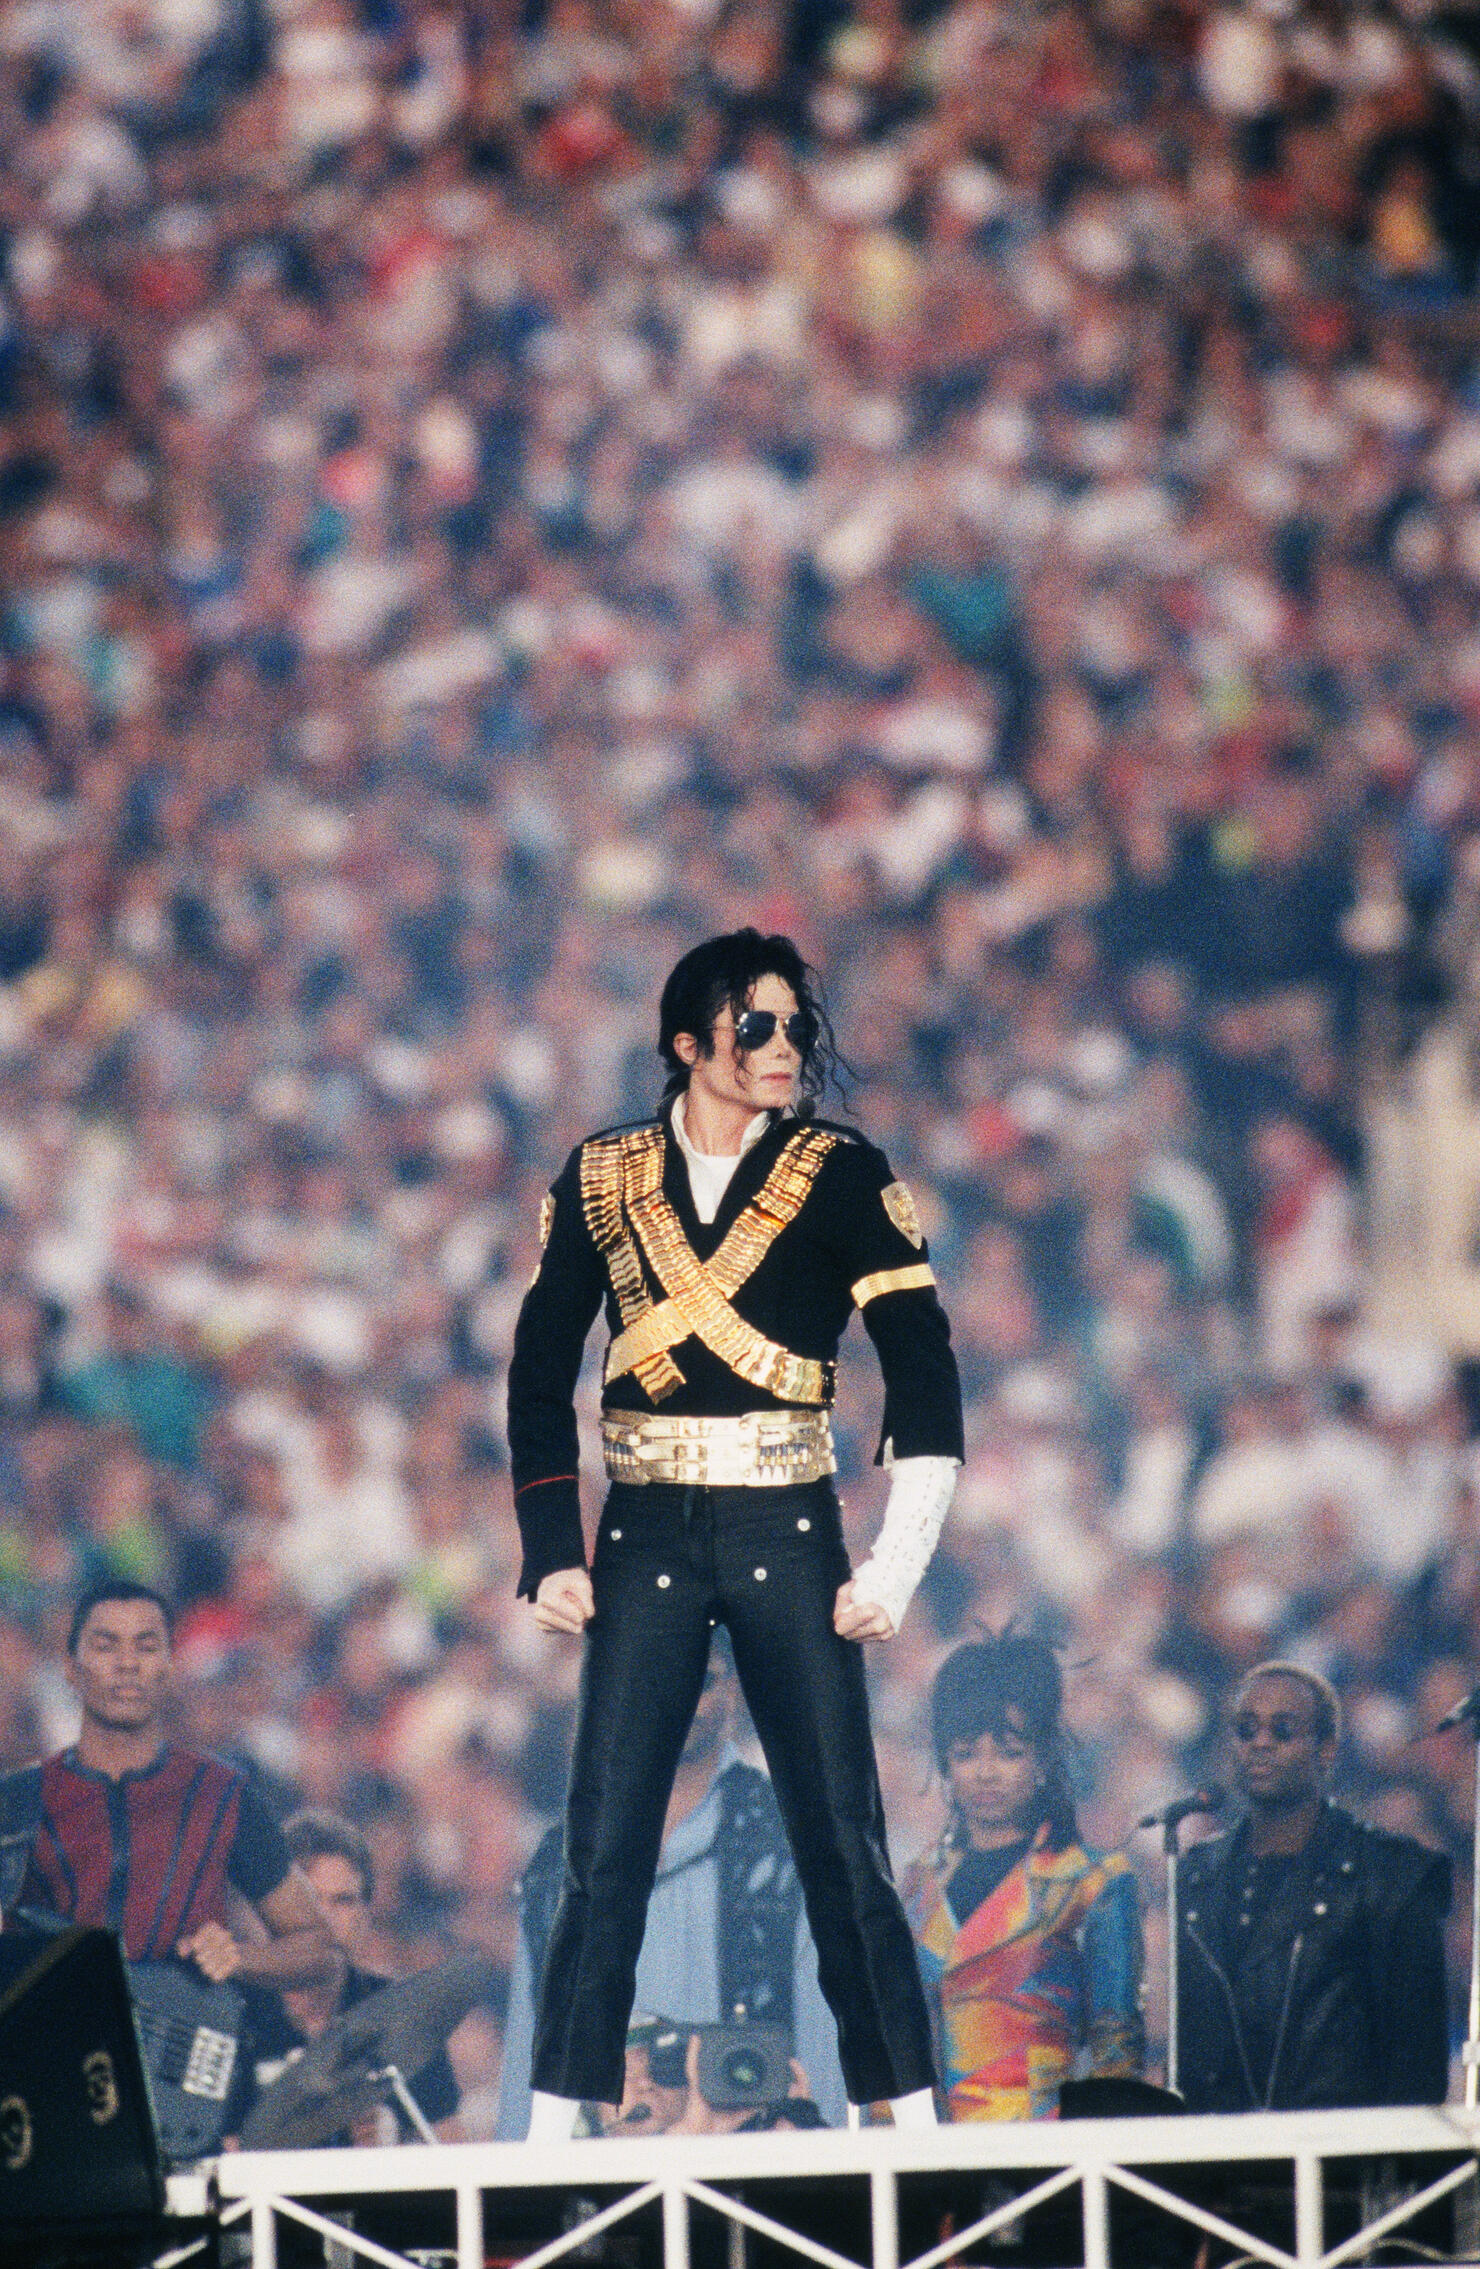 Singer Michael Jackson Performs at Superbowl XXVII